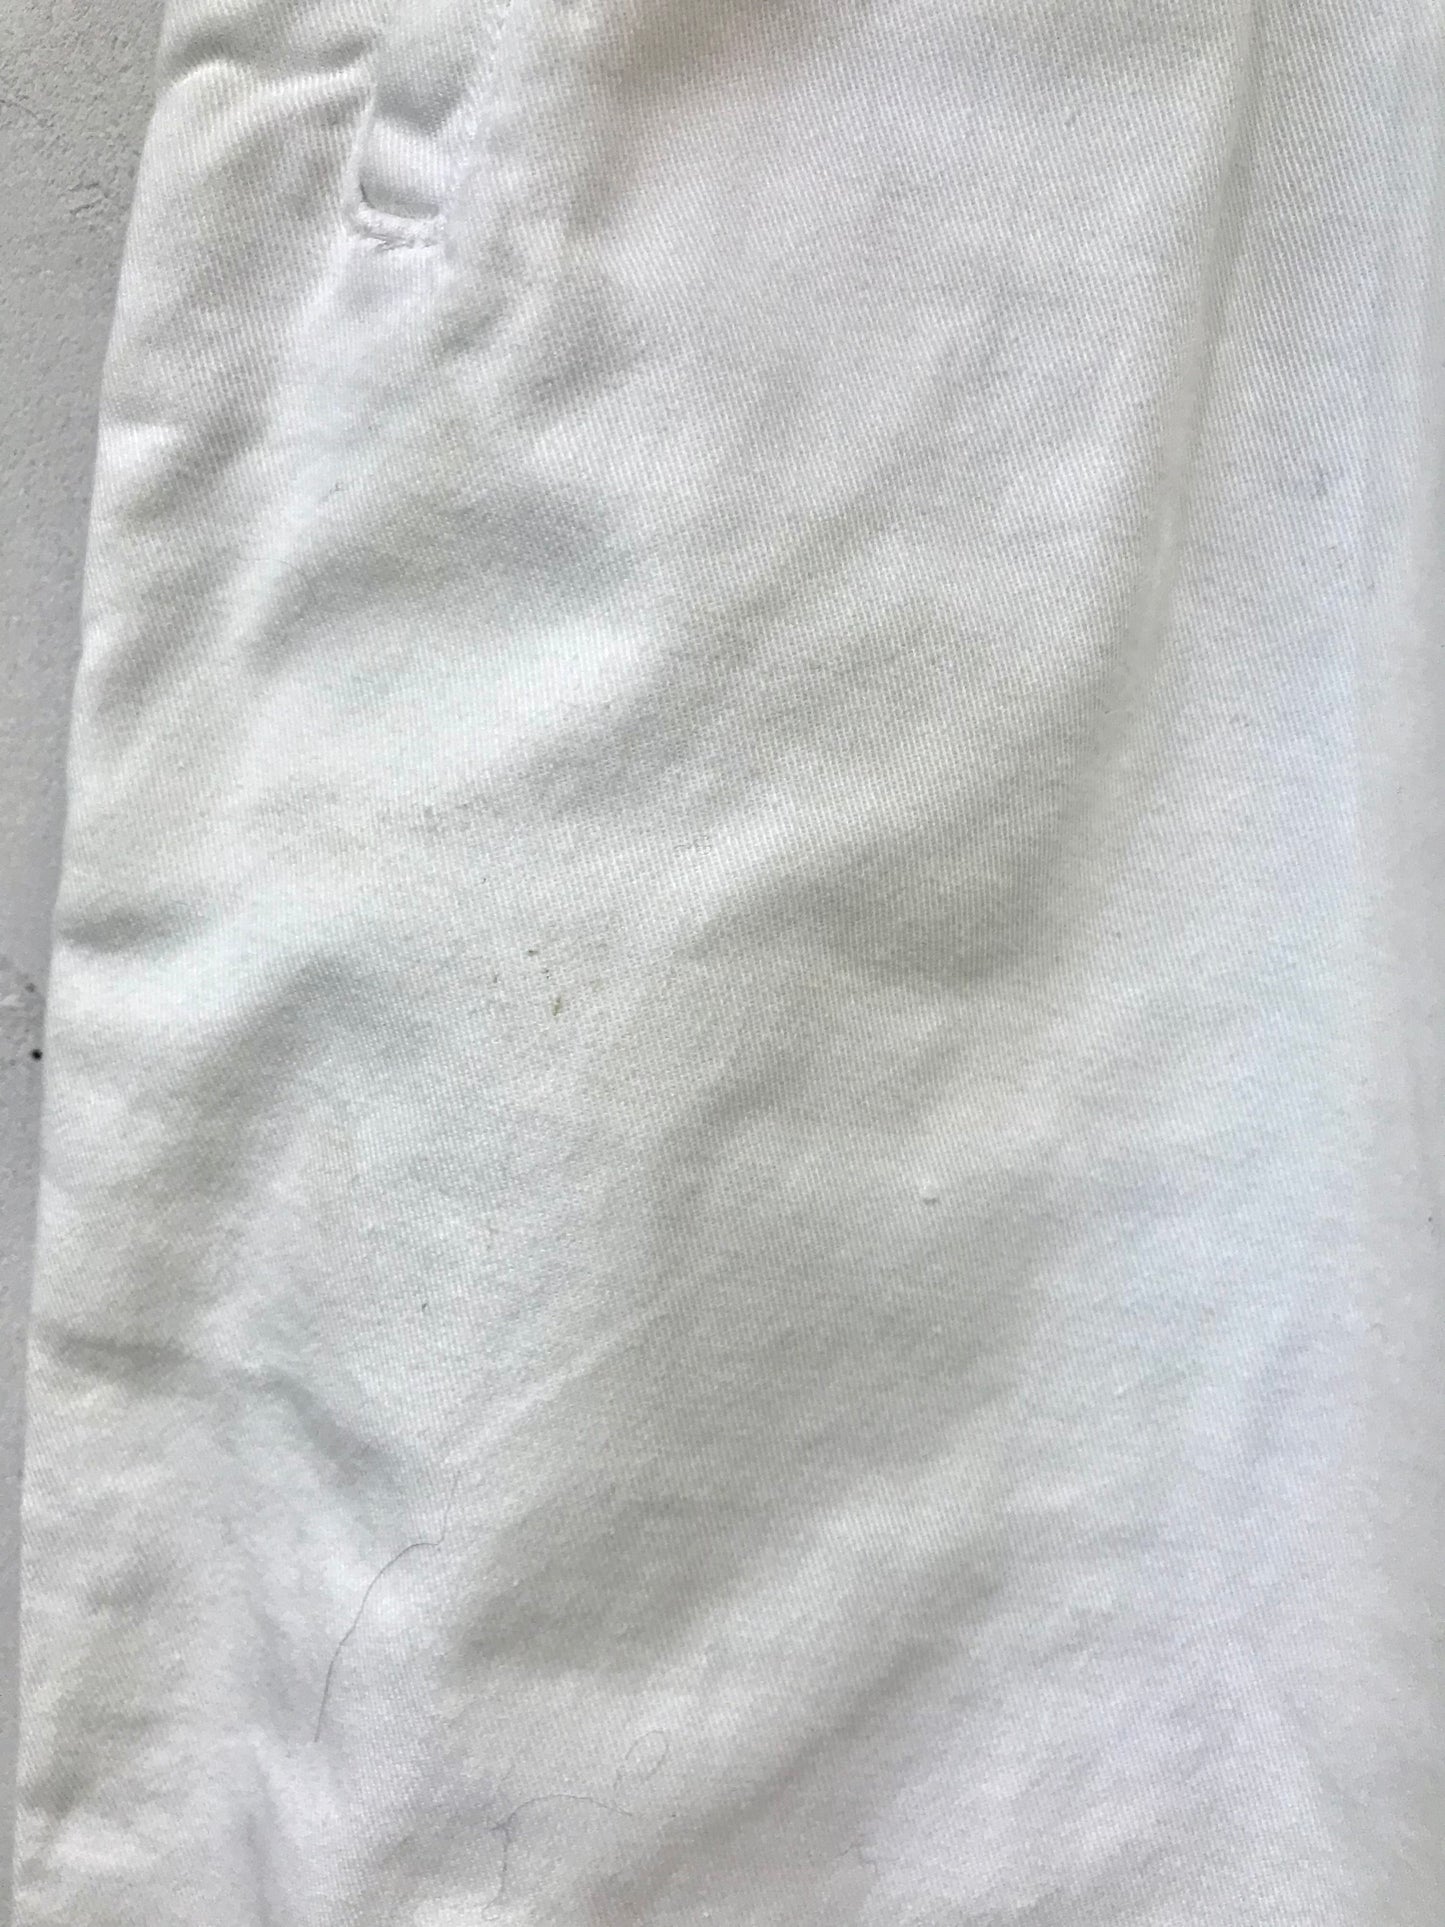 Vintage White Cotton Pants 〜DOCKERS〜 [A26045]